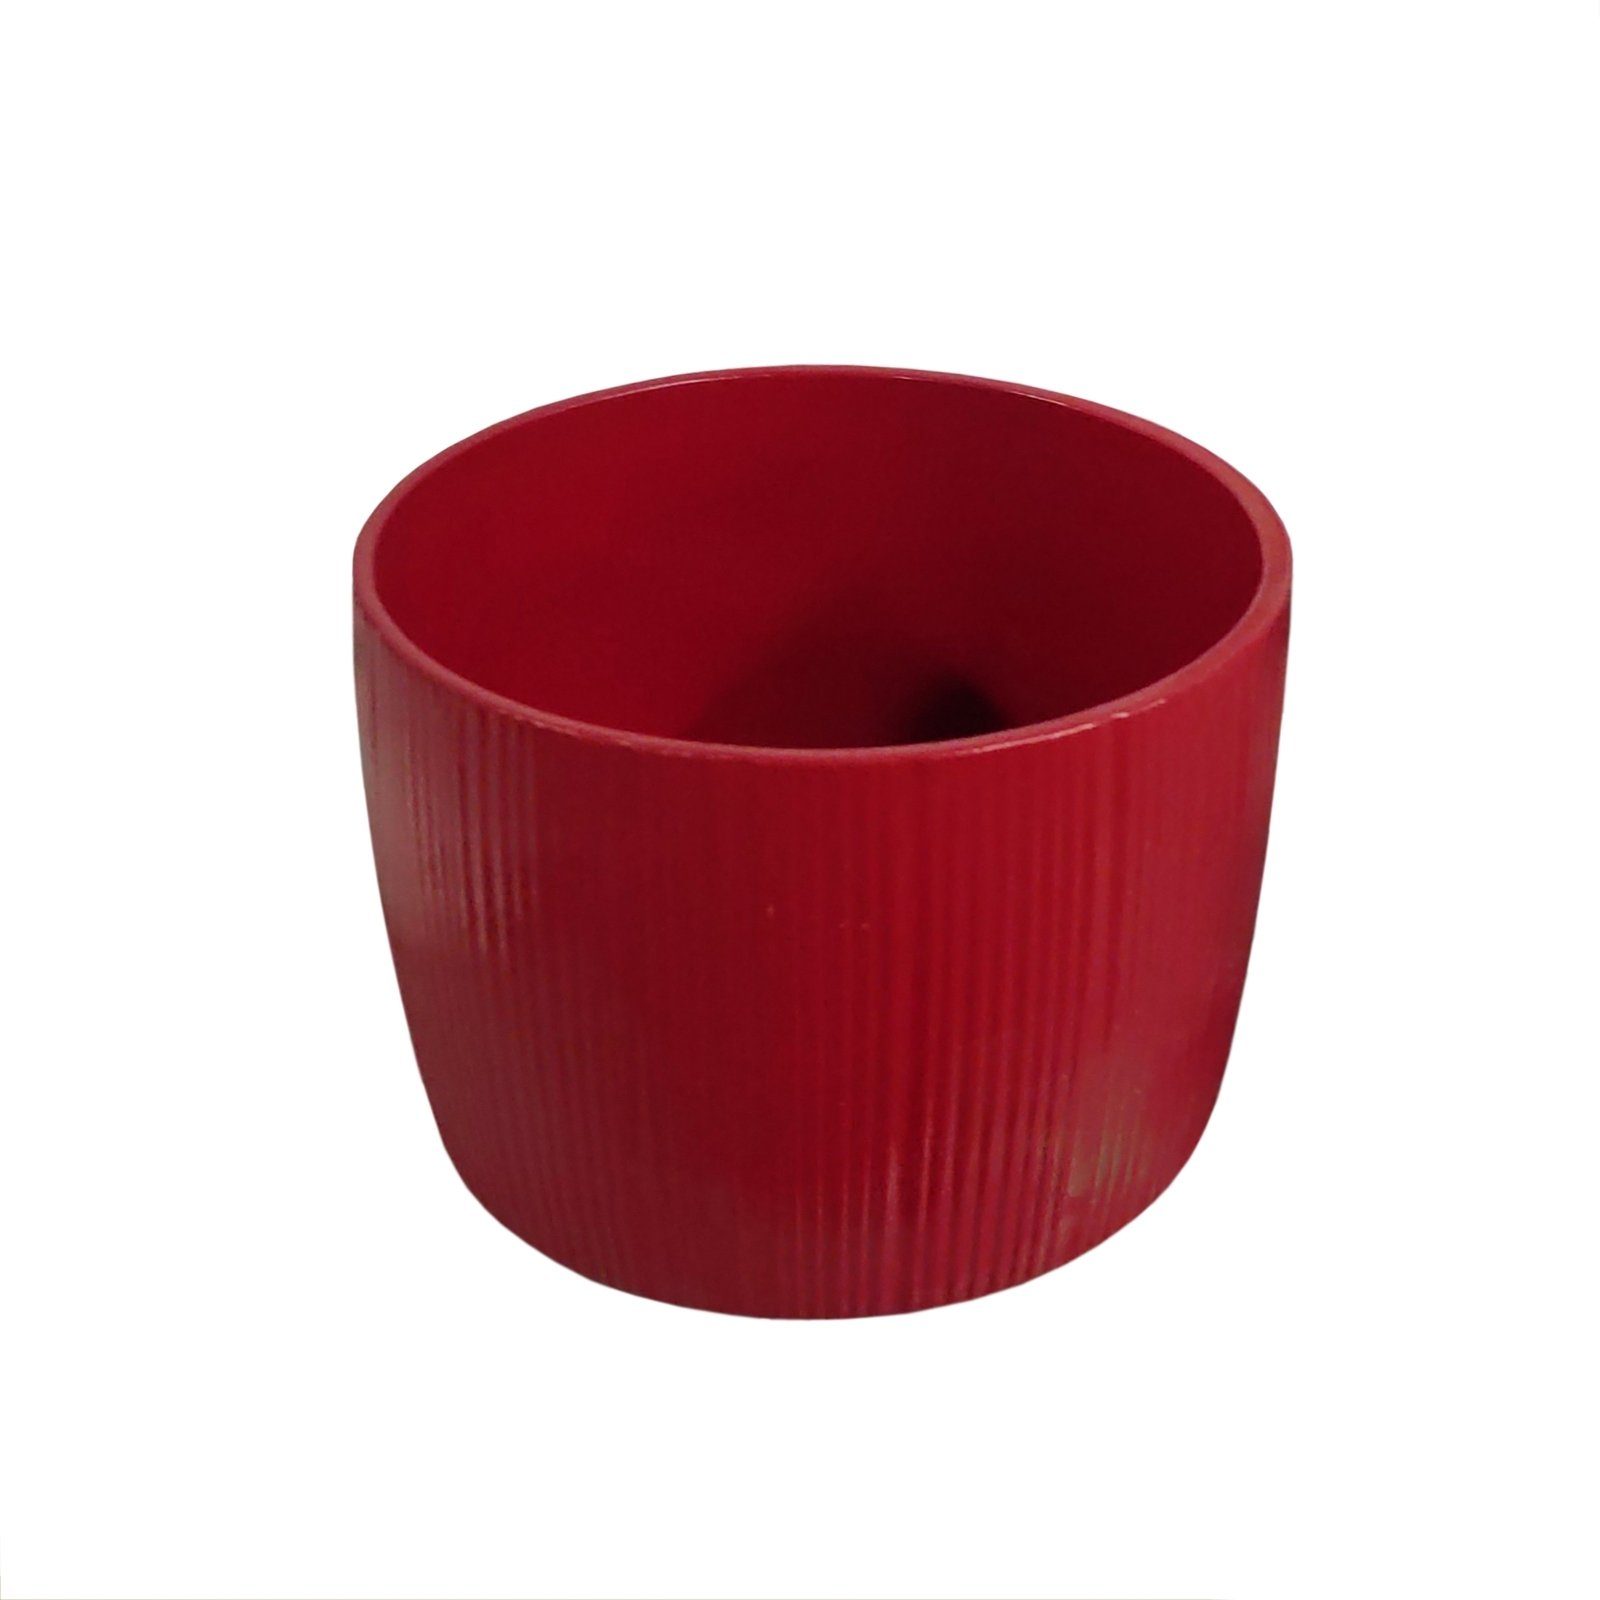 (Stück, HTI-Living Blumentopf Keramik Bauchig Übertopf St) 1 Rot